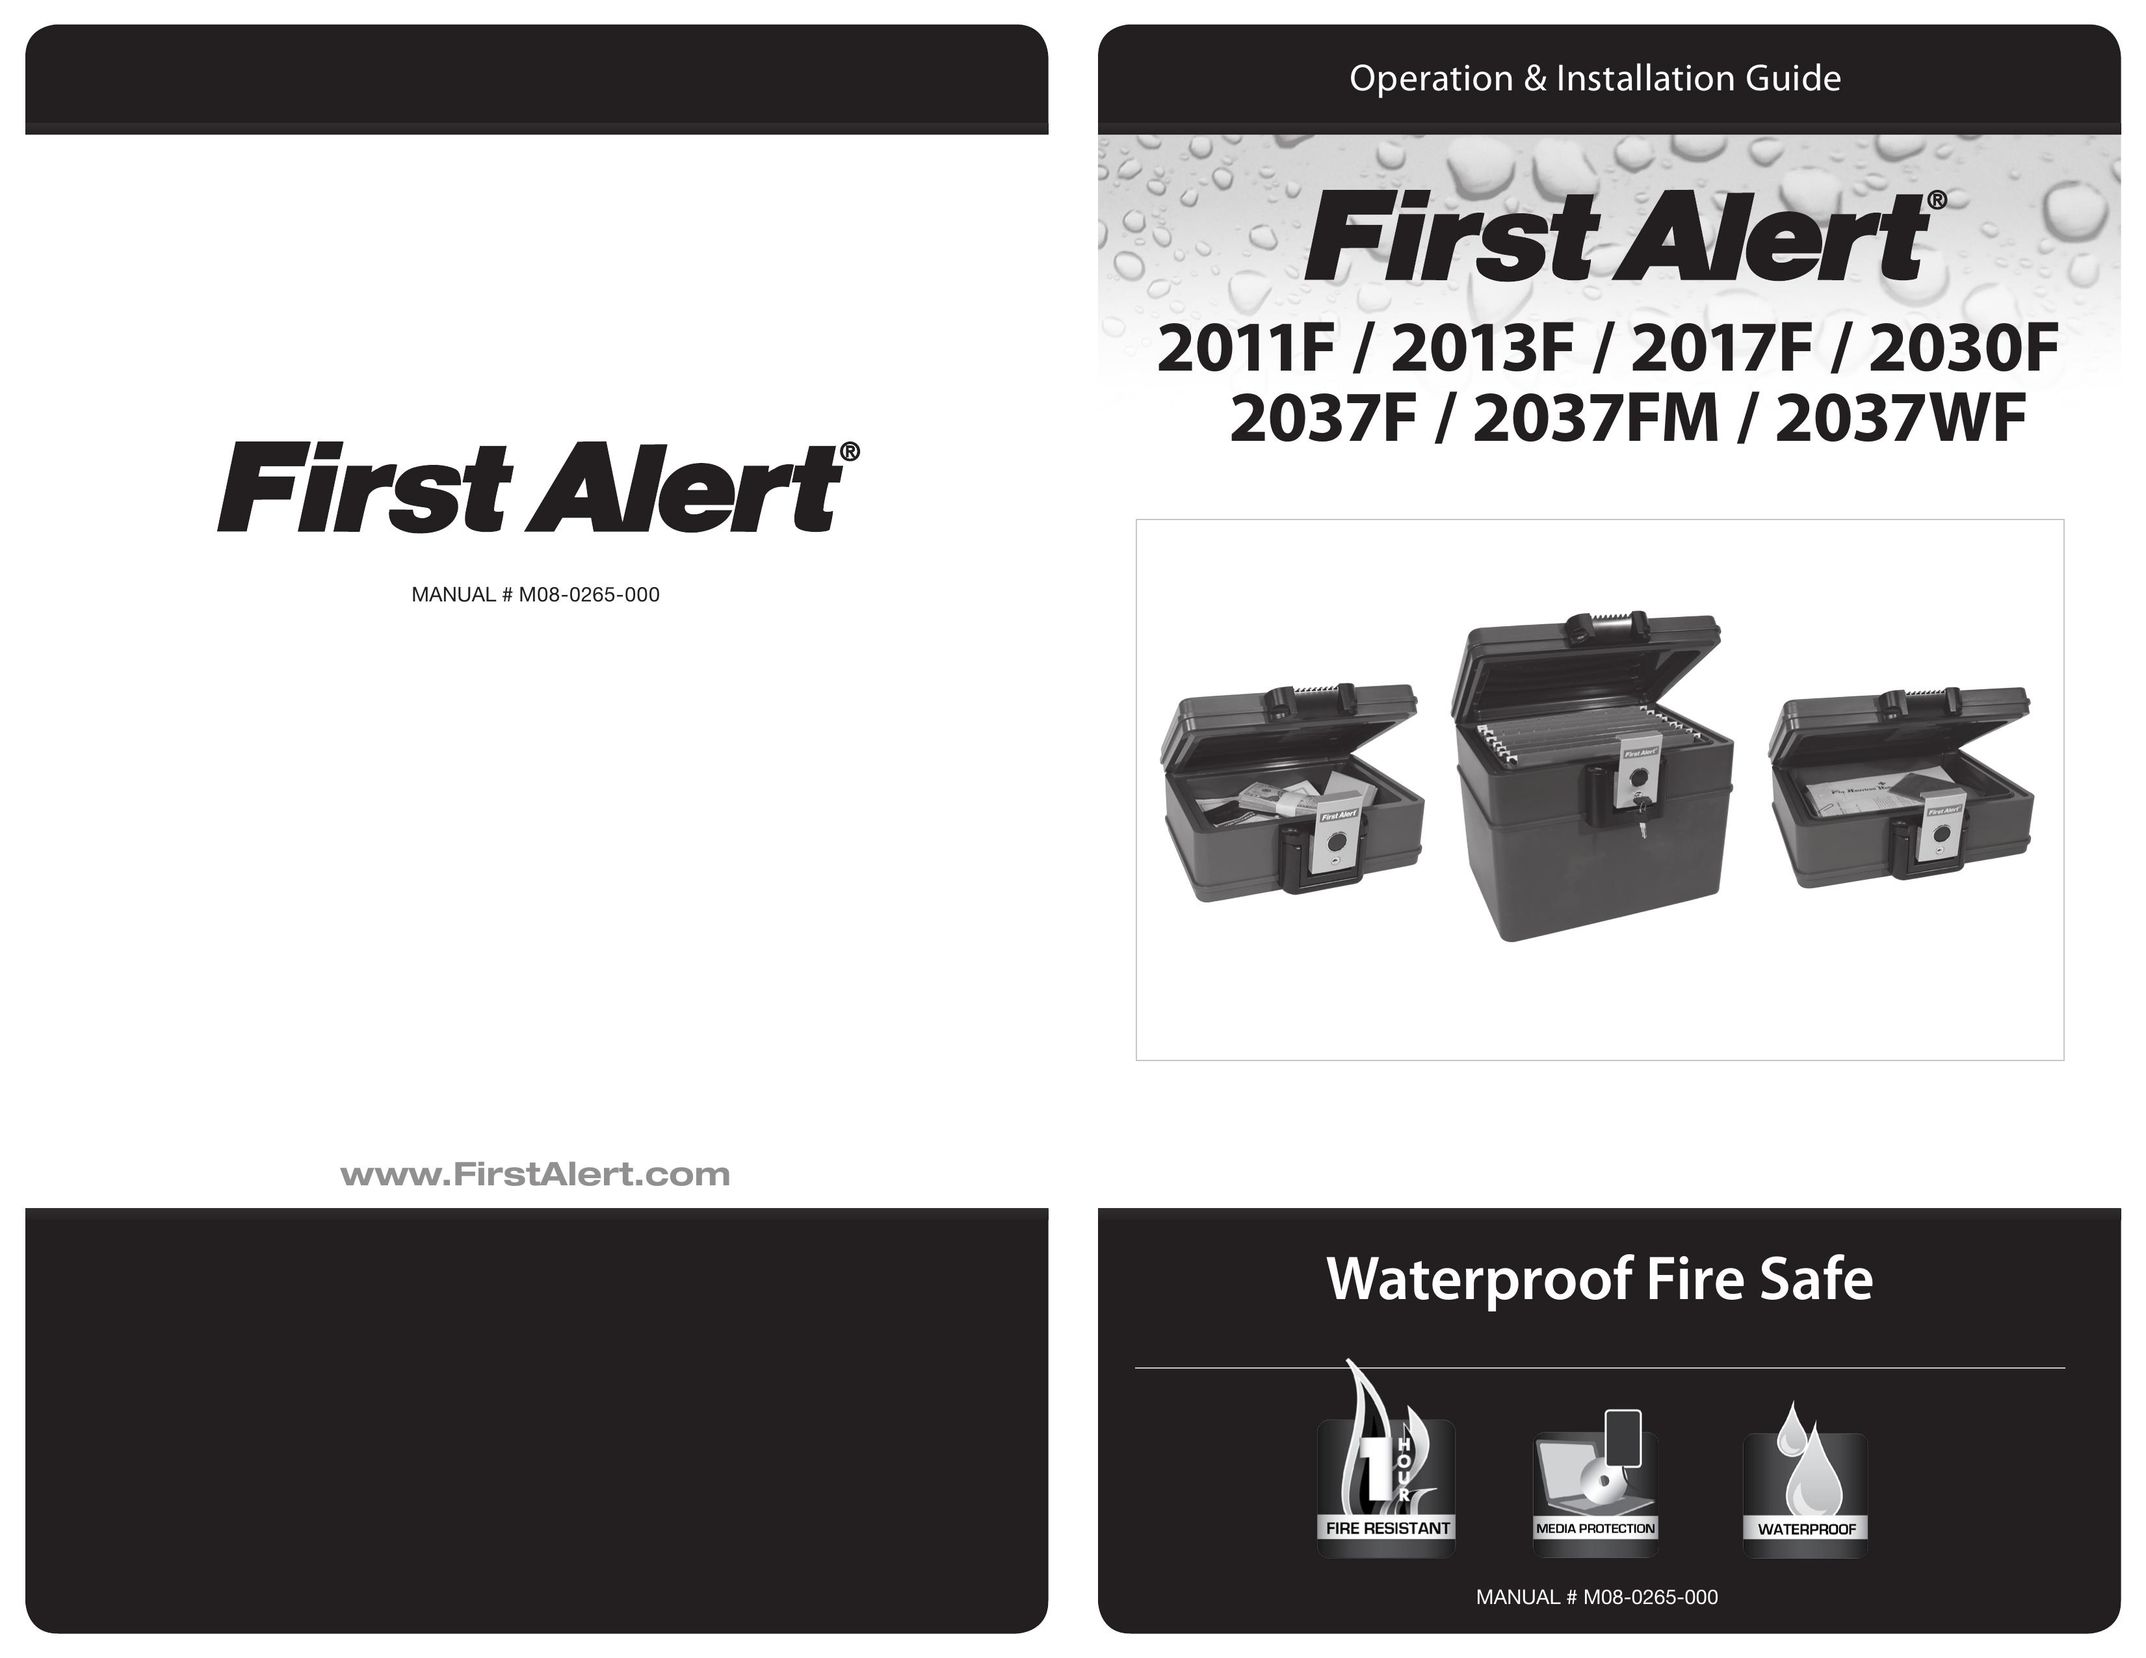 First Alert 2037FM Portable Media Storage User Manual